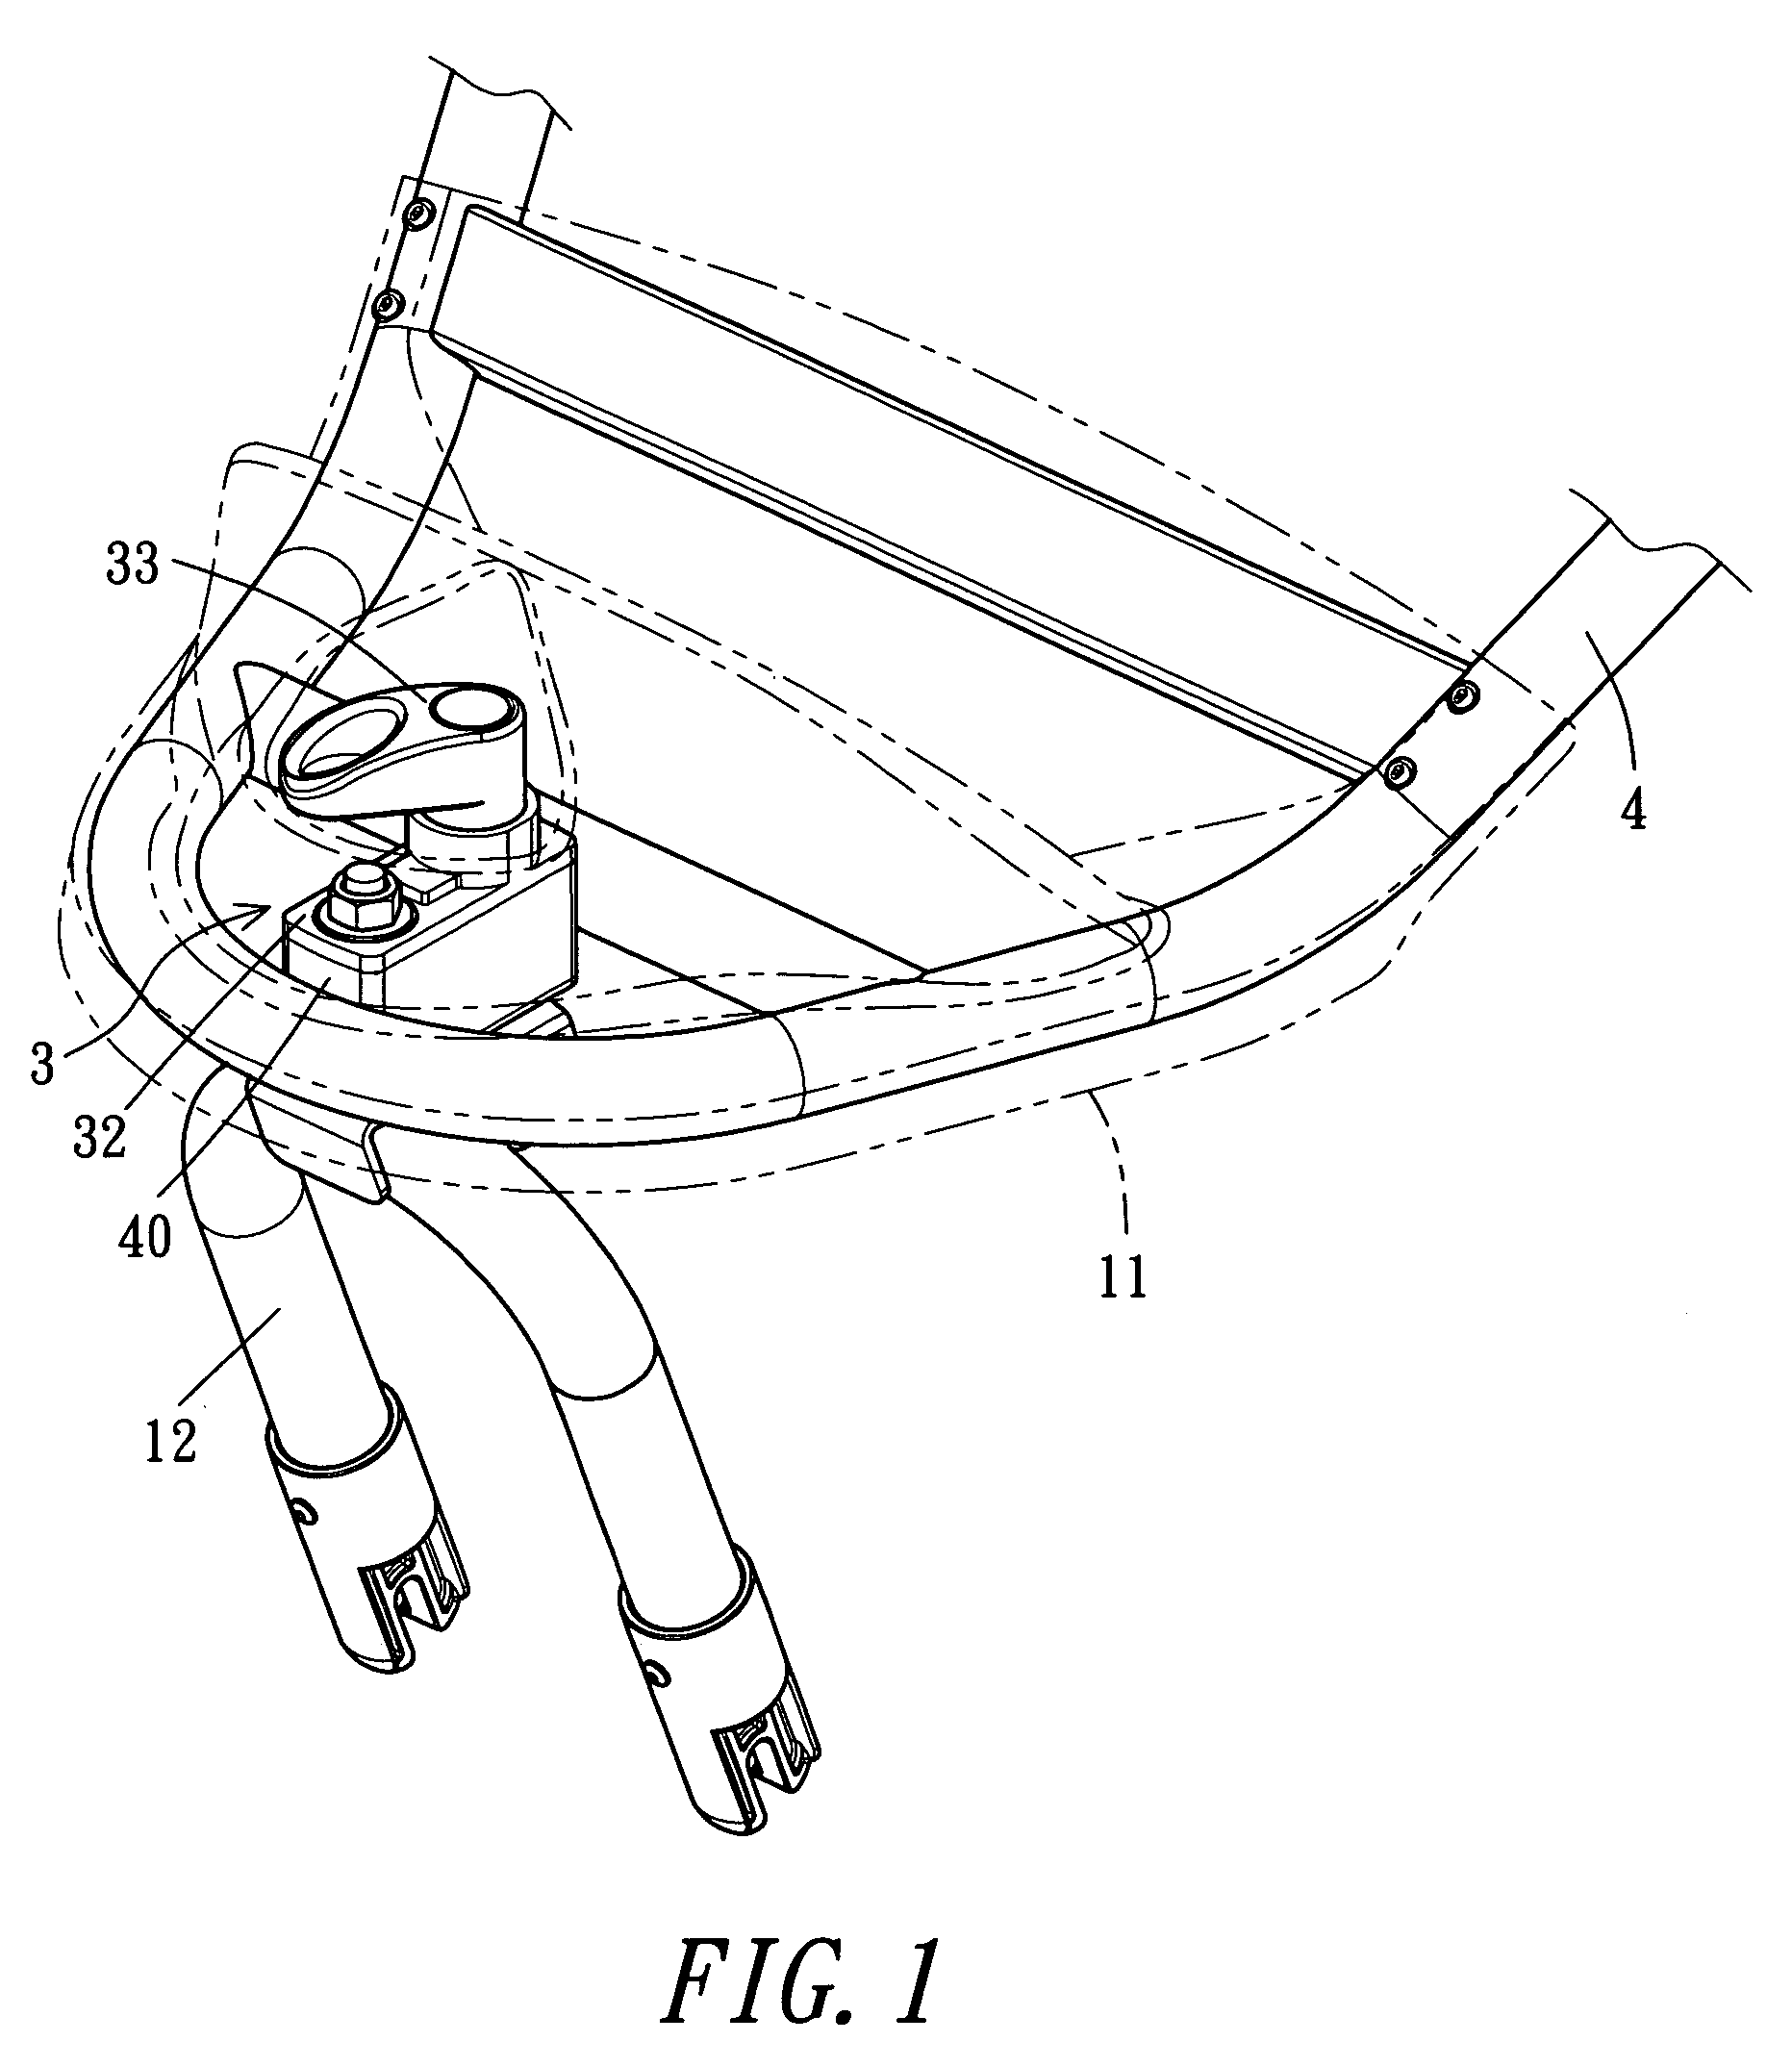 Stroller having front wheel positioning device